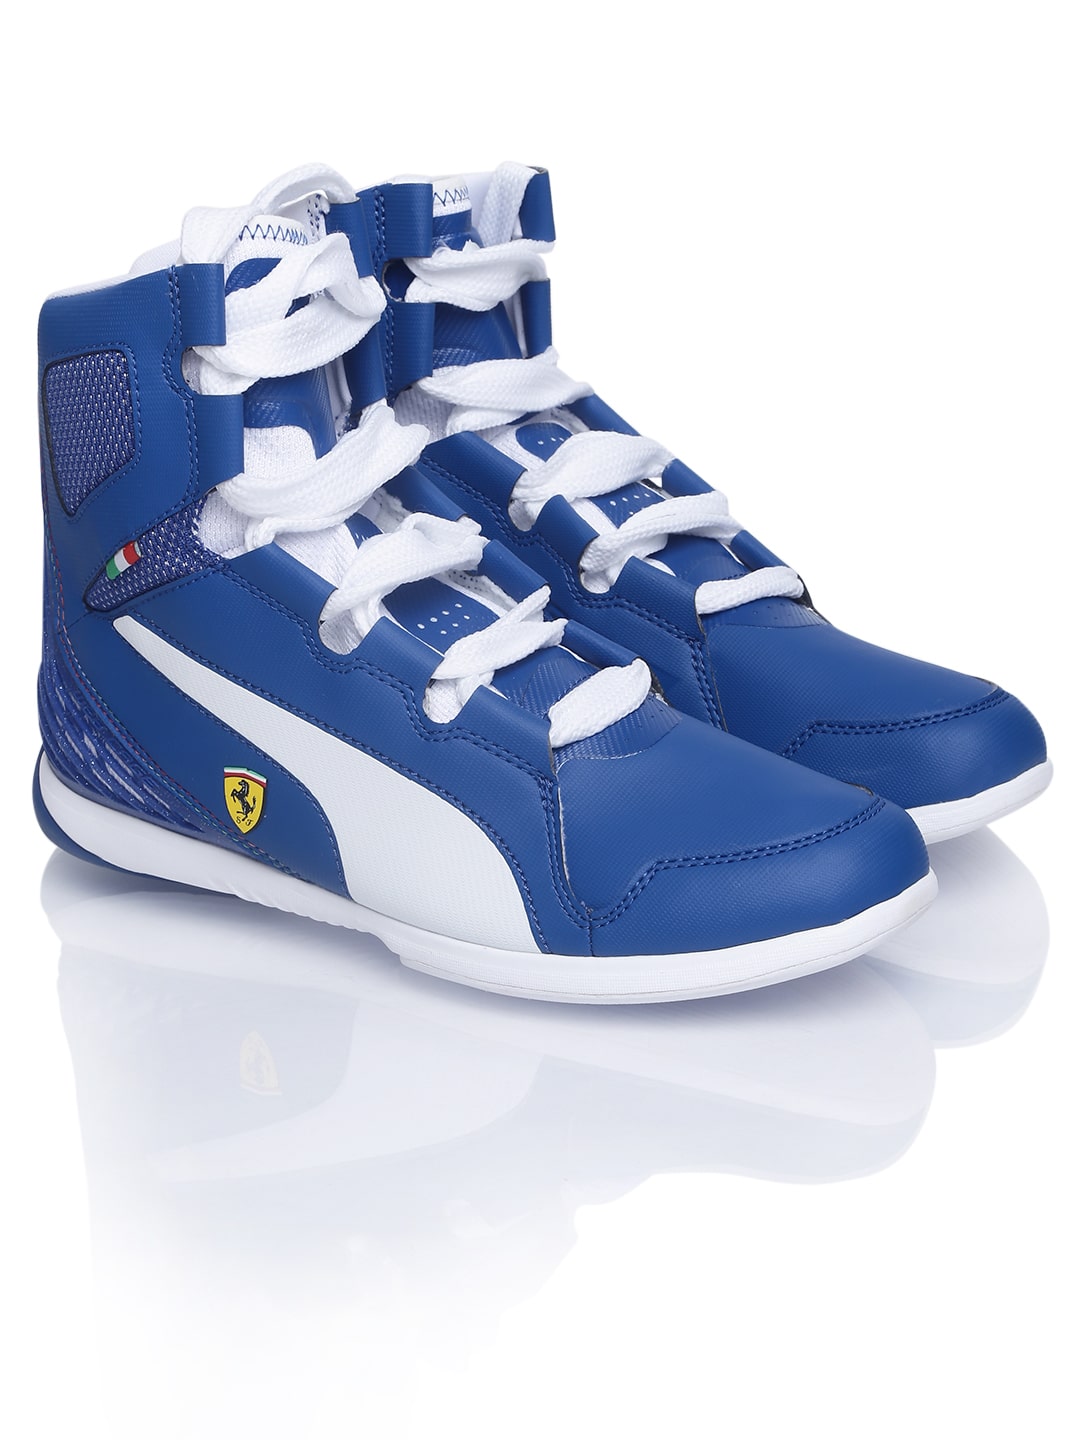 puma ferrari blue shoes - 51% OFF 